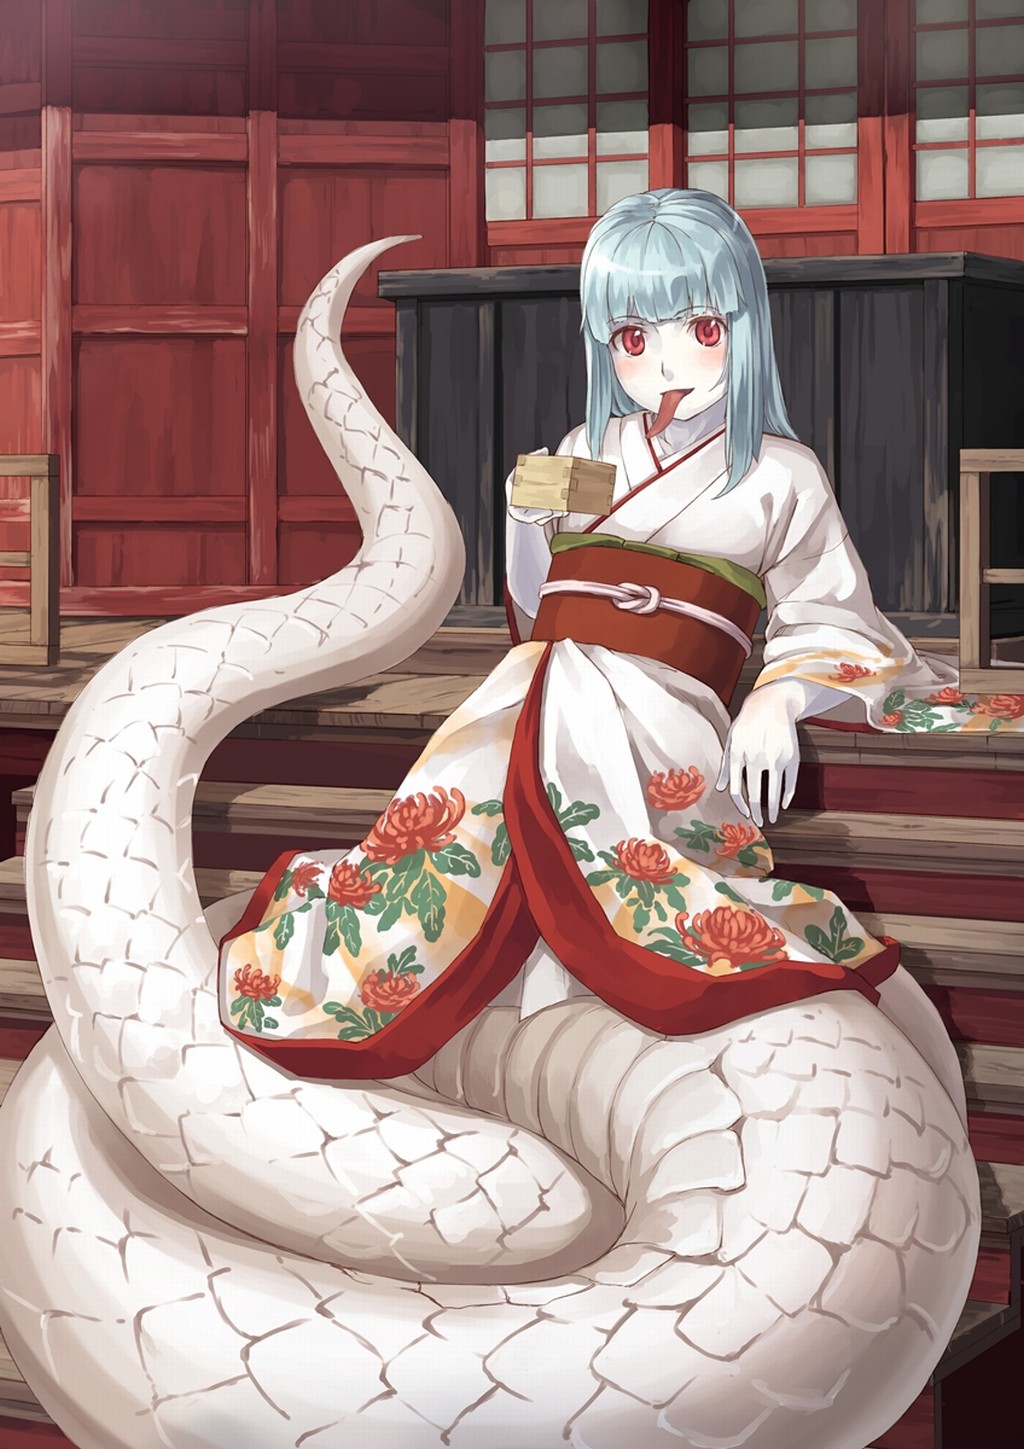 аниме девушка змея в юката картинка с юмором